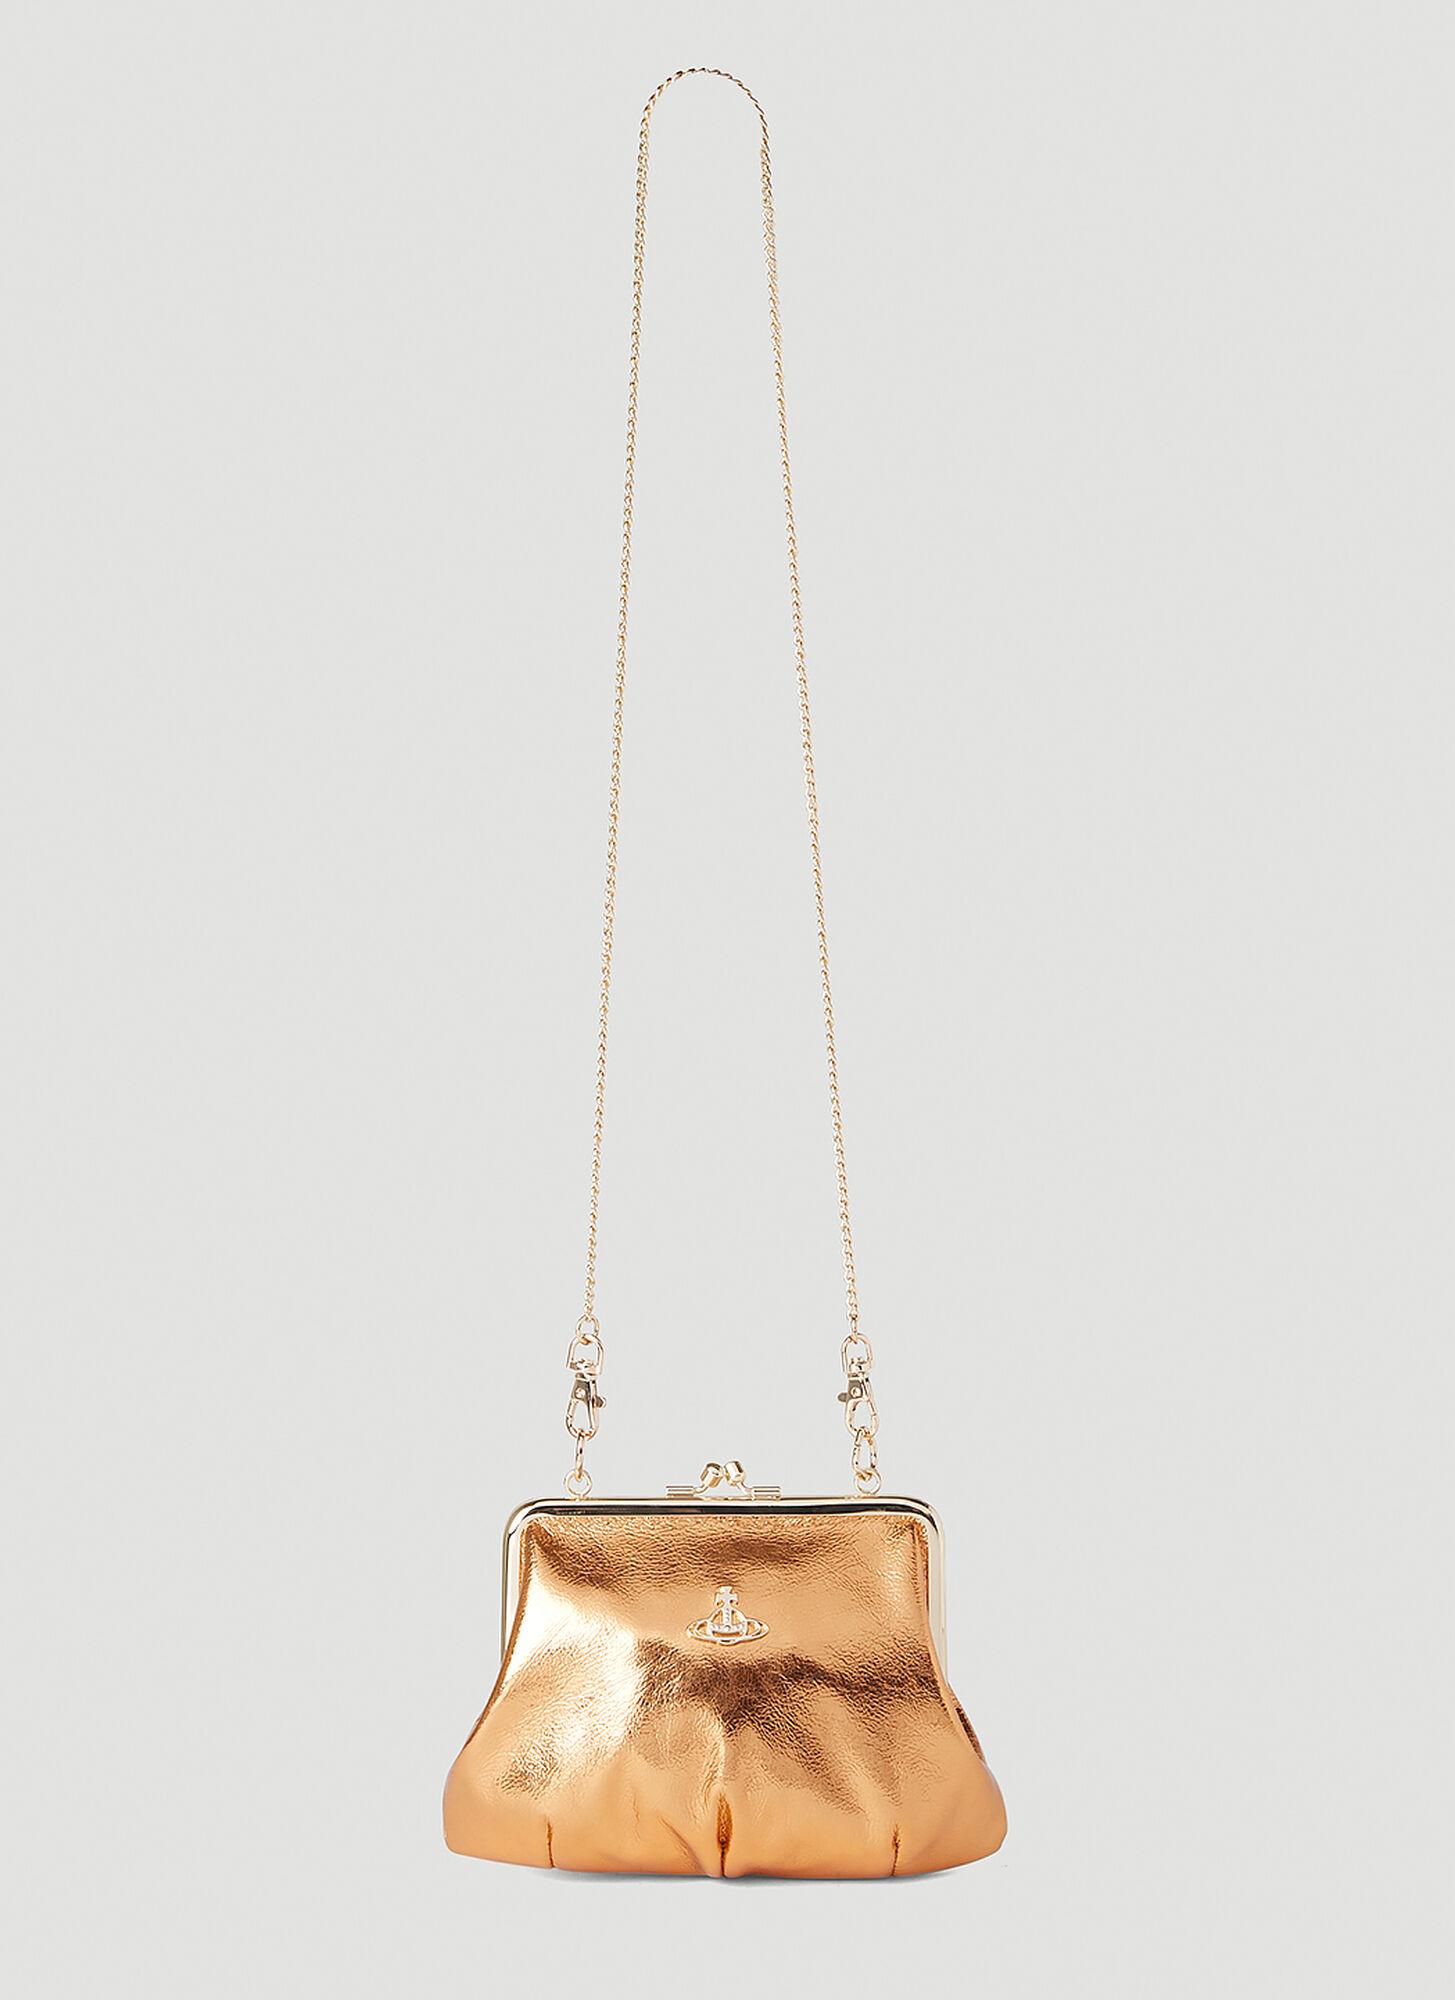 Vivienne Westwood Granny Frame Clutch Bag in Natural | Lyst